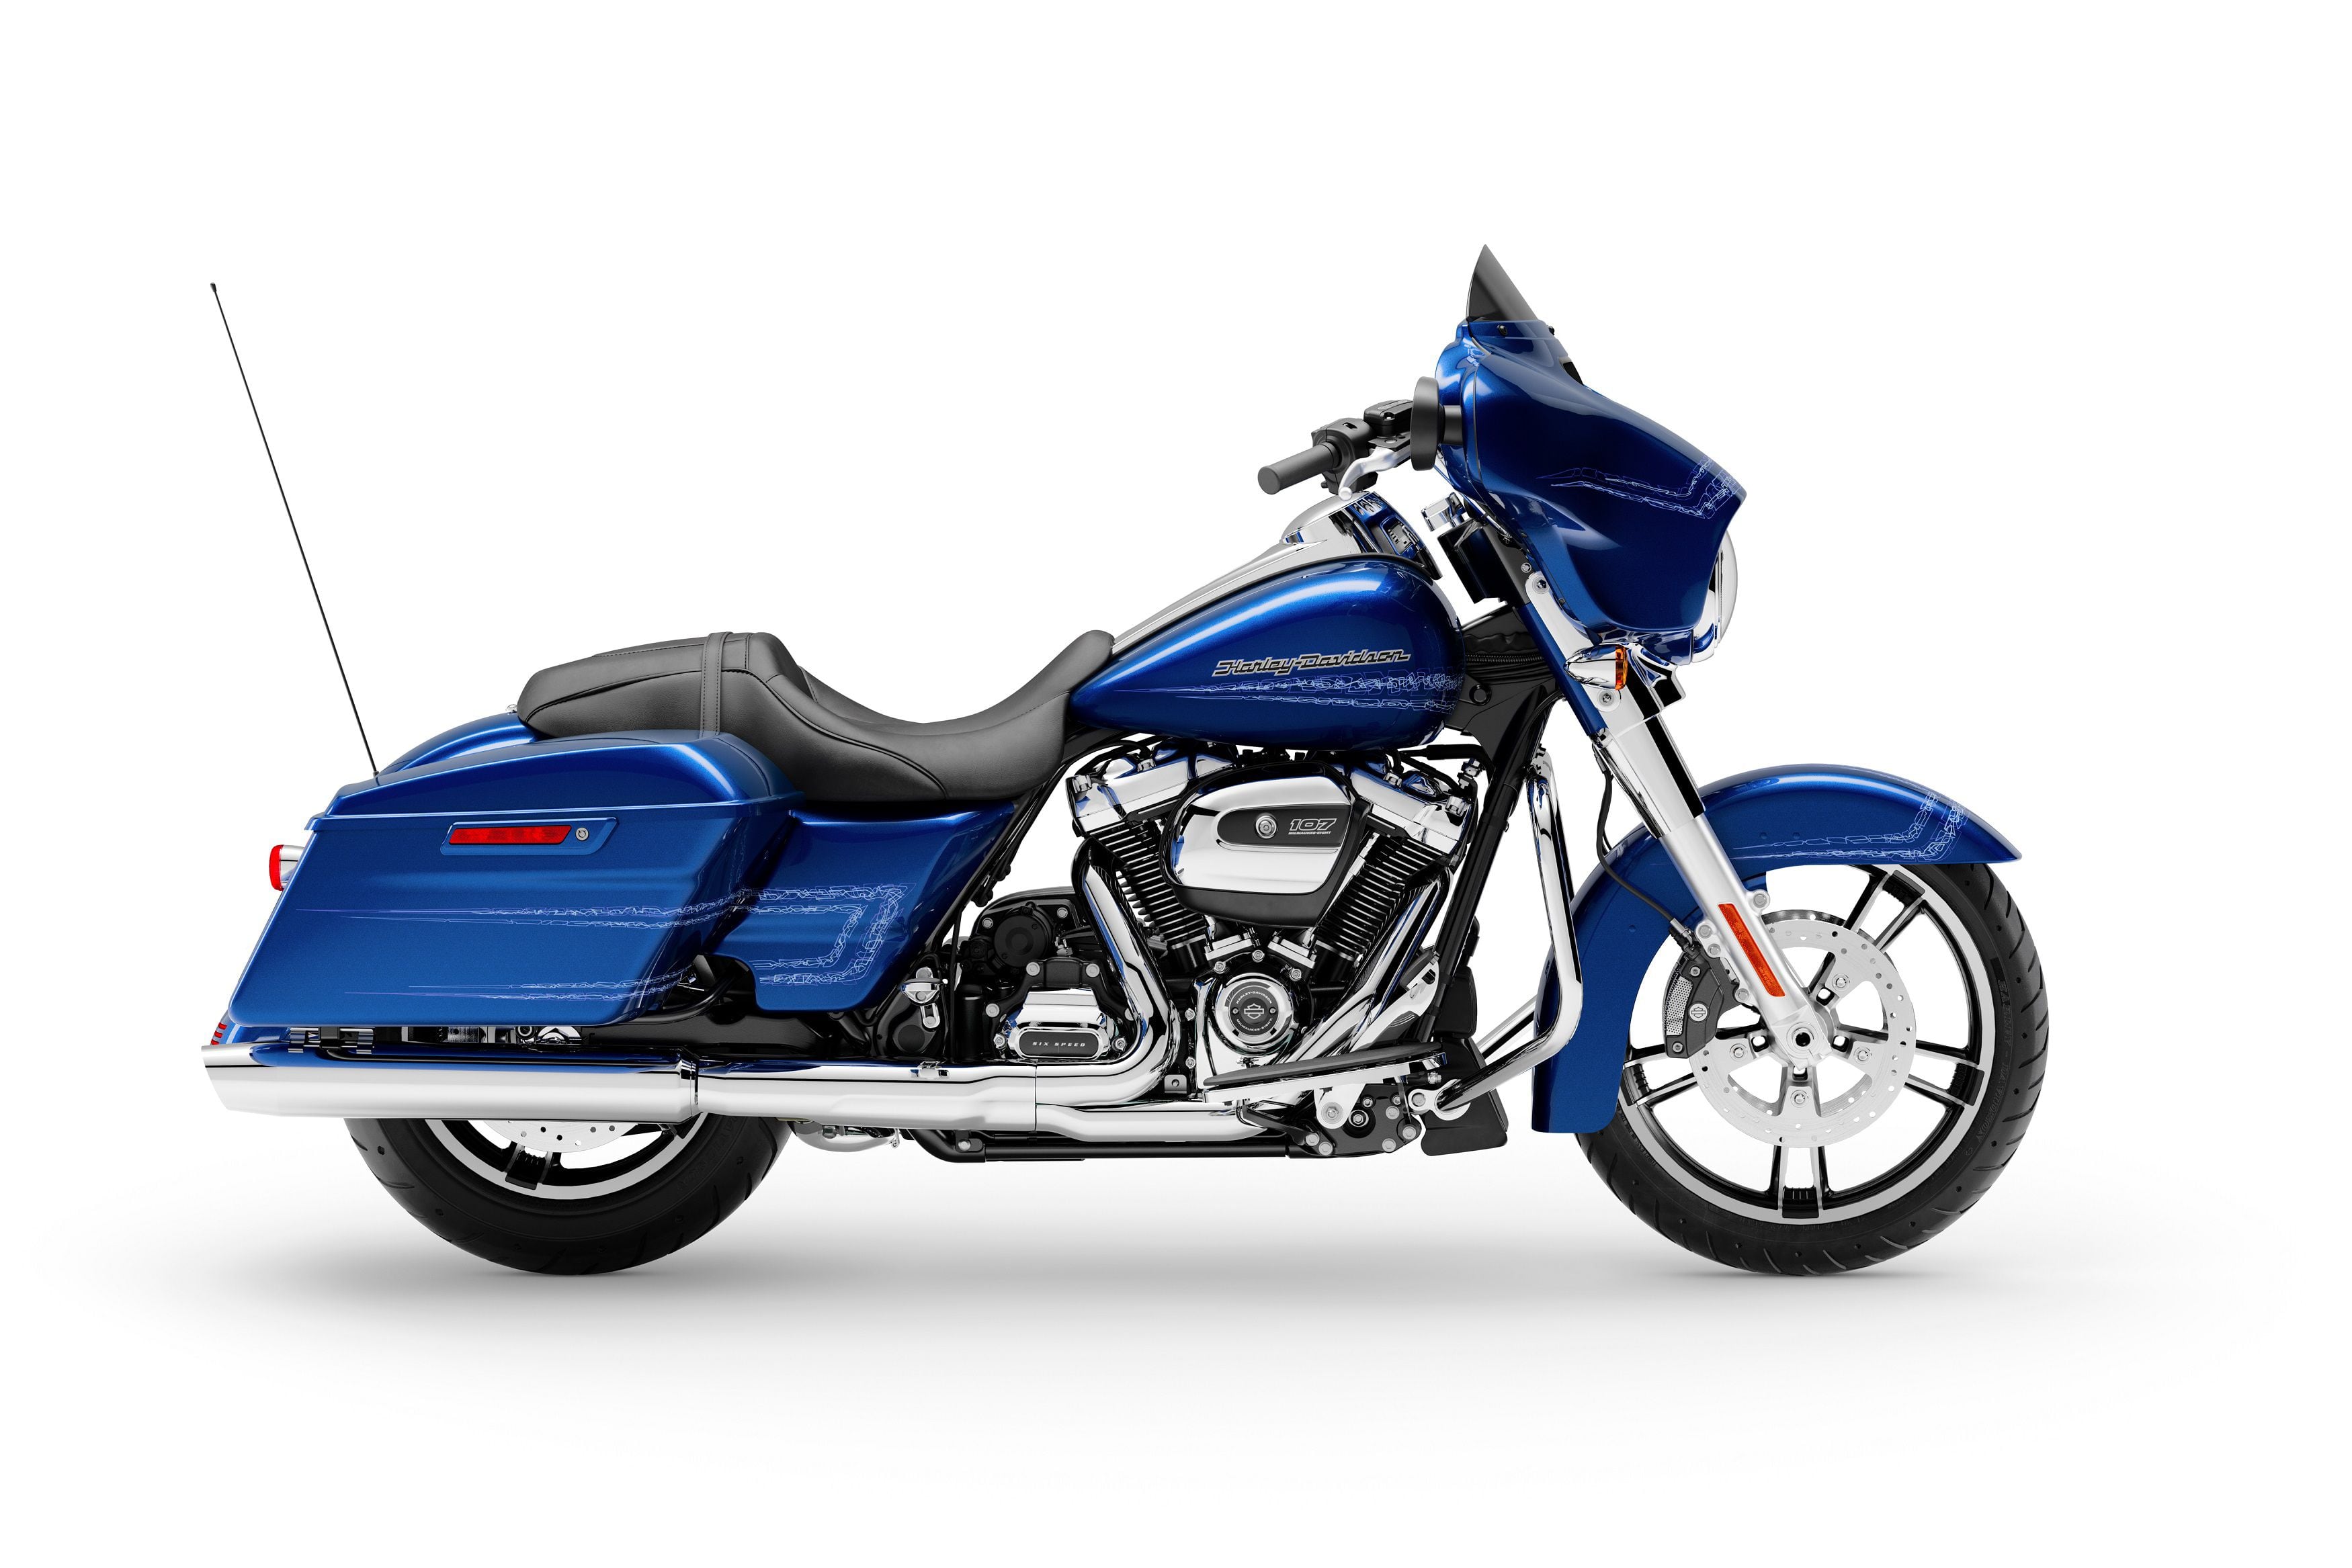 2020 Harley-Davidson Street Glide Buyer's Guide: Specs, Photos, Price